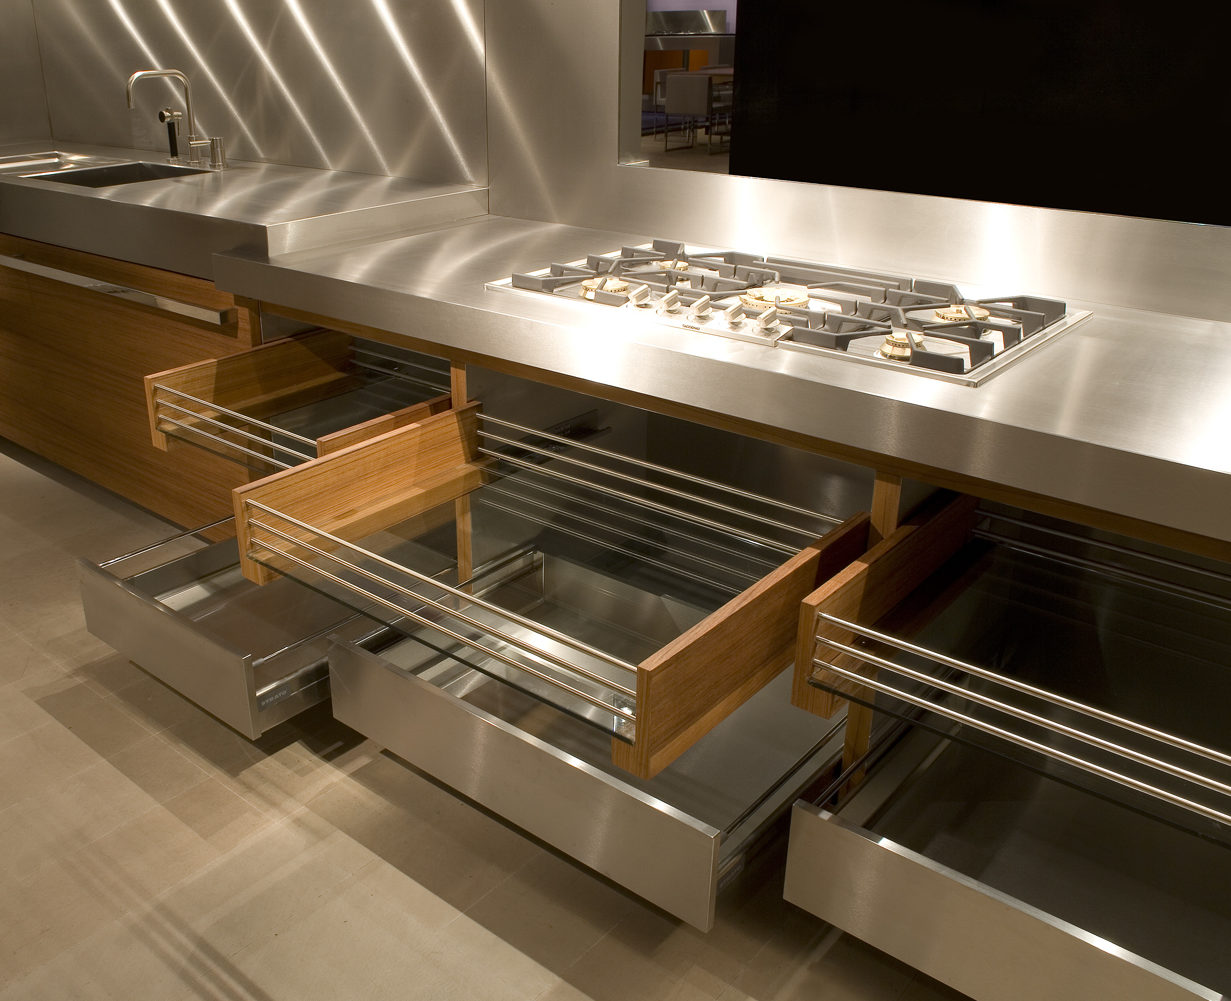 Strato_design_Non Plus Ultra_bespoke kitchen project in Milano_Teak wood_mat stainless steel_stratocolor tortora_13